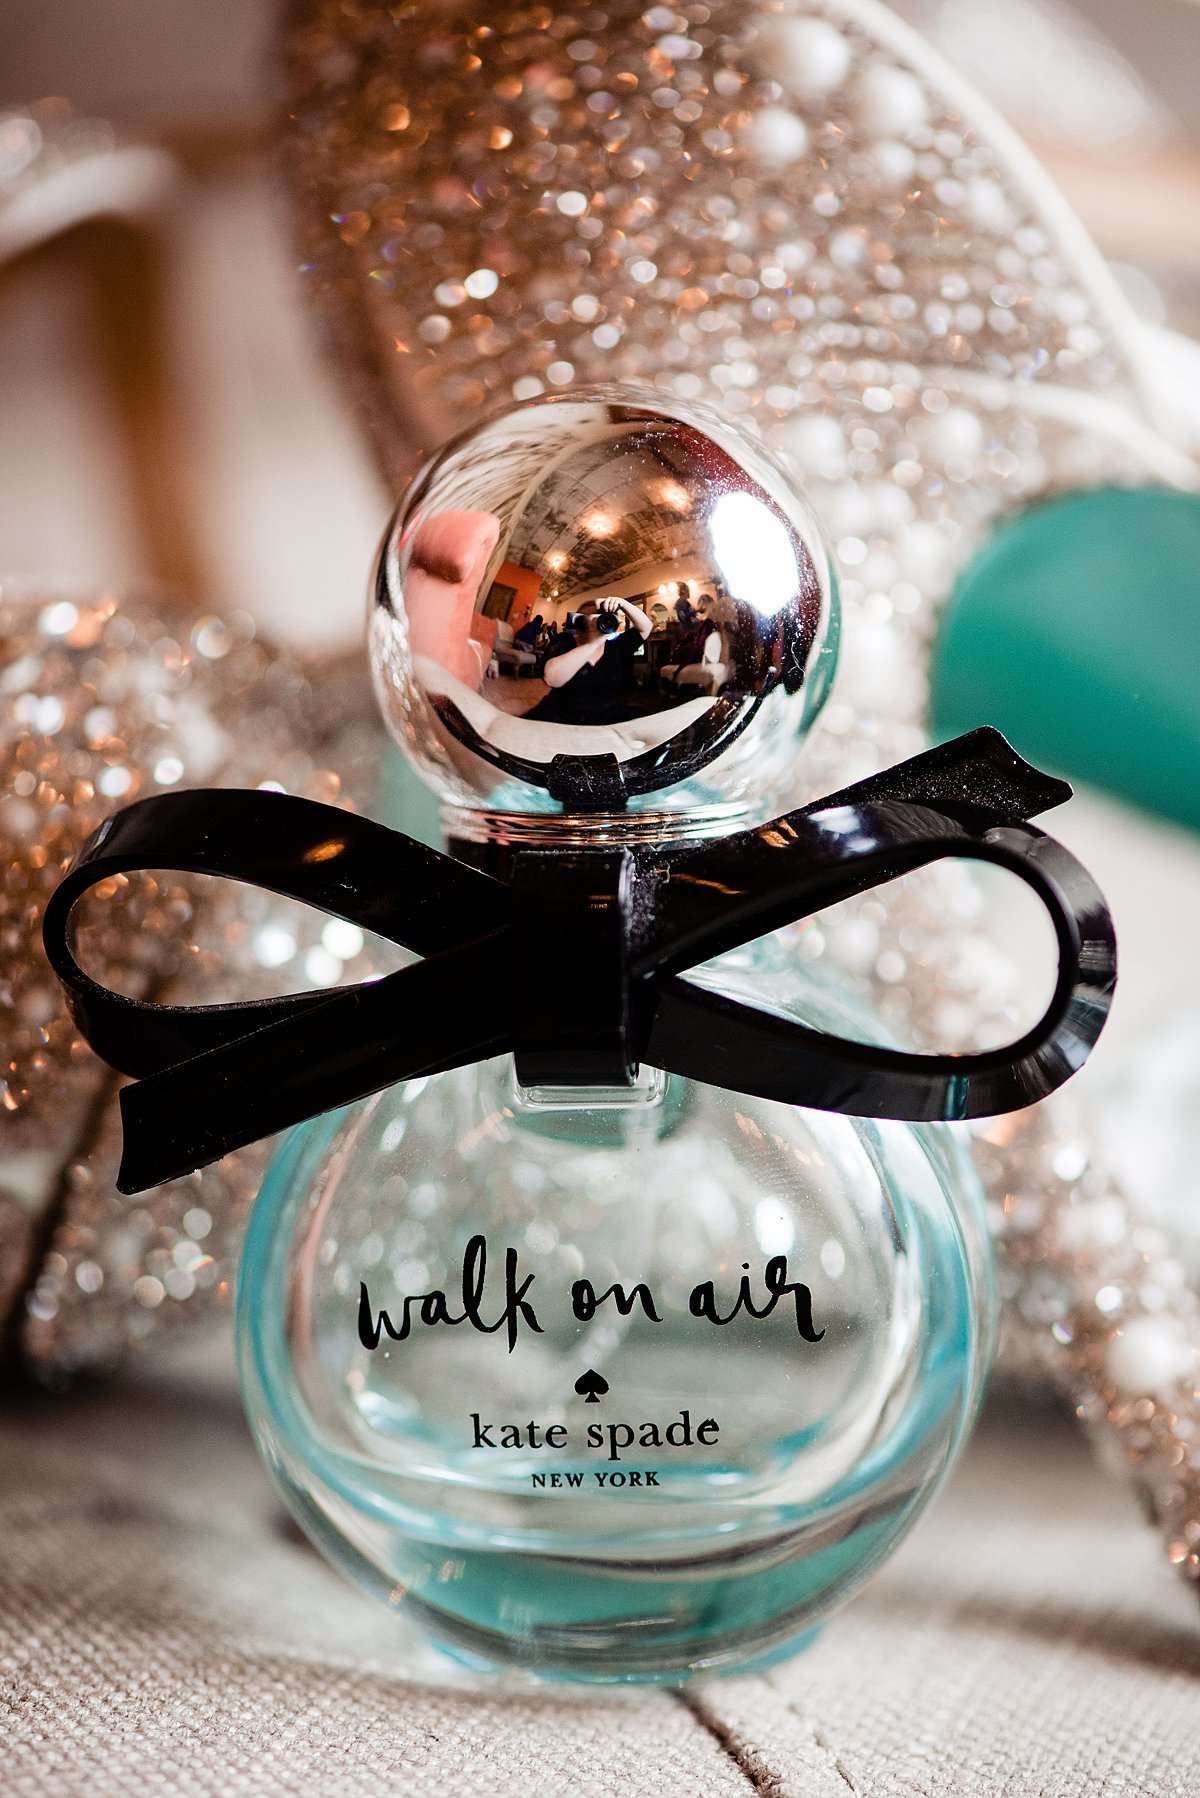 Cute bottle of Kate Spade perfume